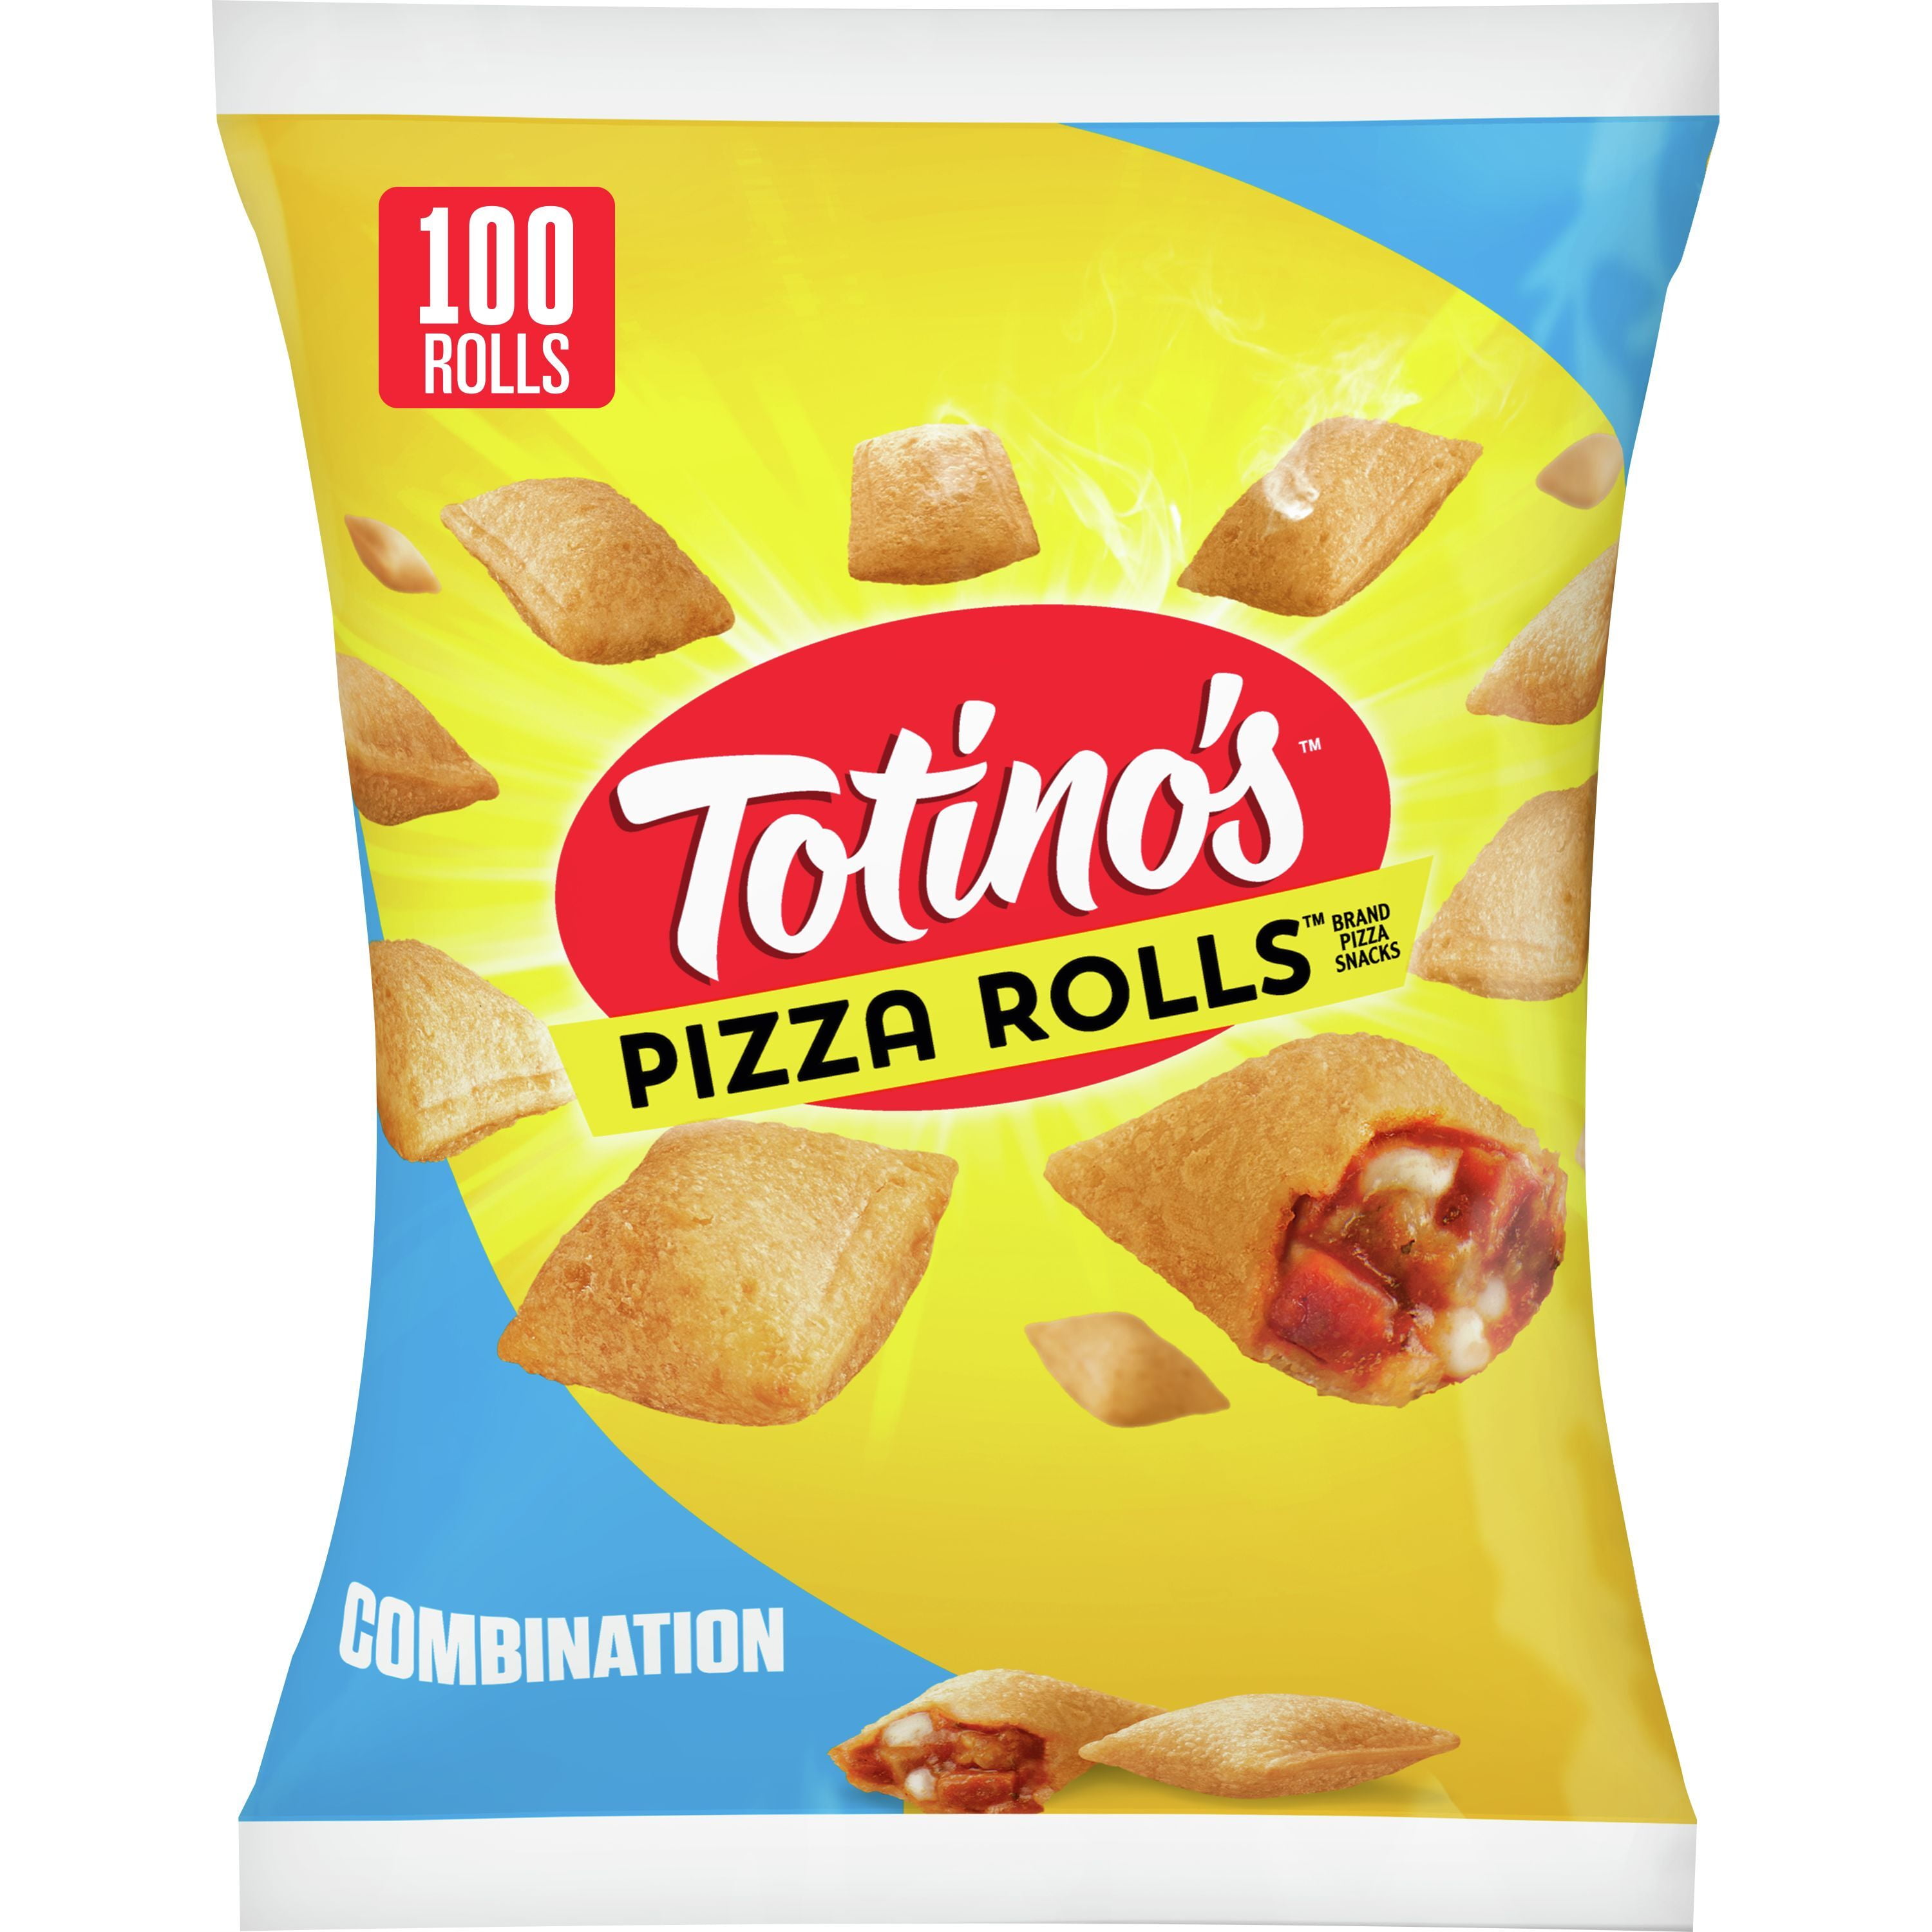 Totino's Pizza Rolls, Combination, Frozen Snacks, 48.85 oz, 100 ct